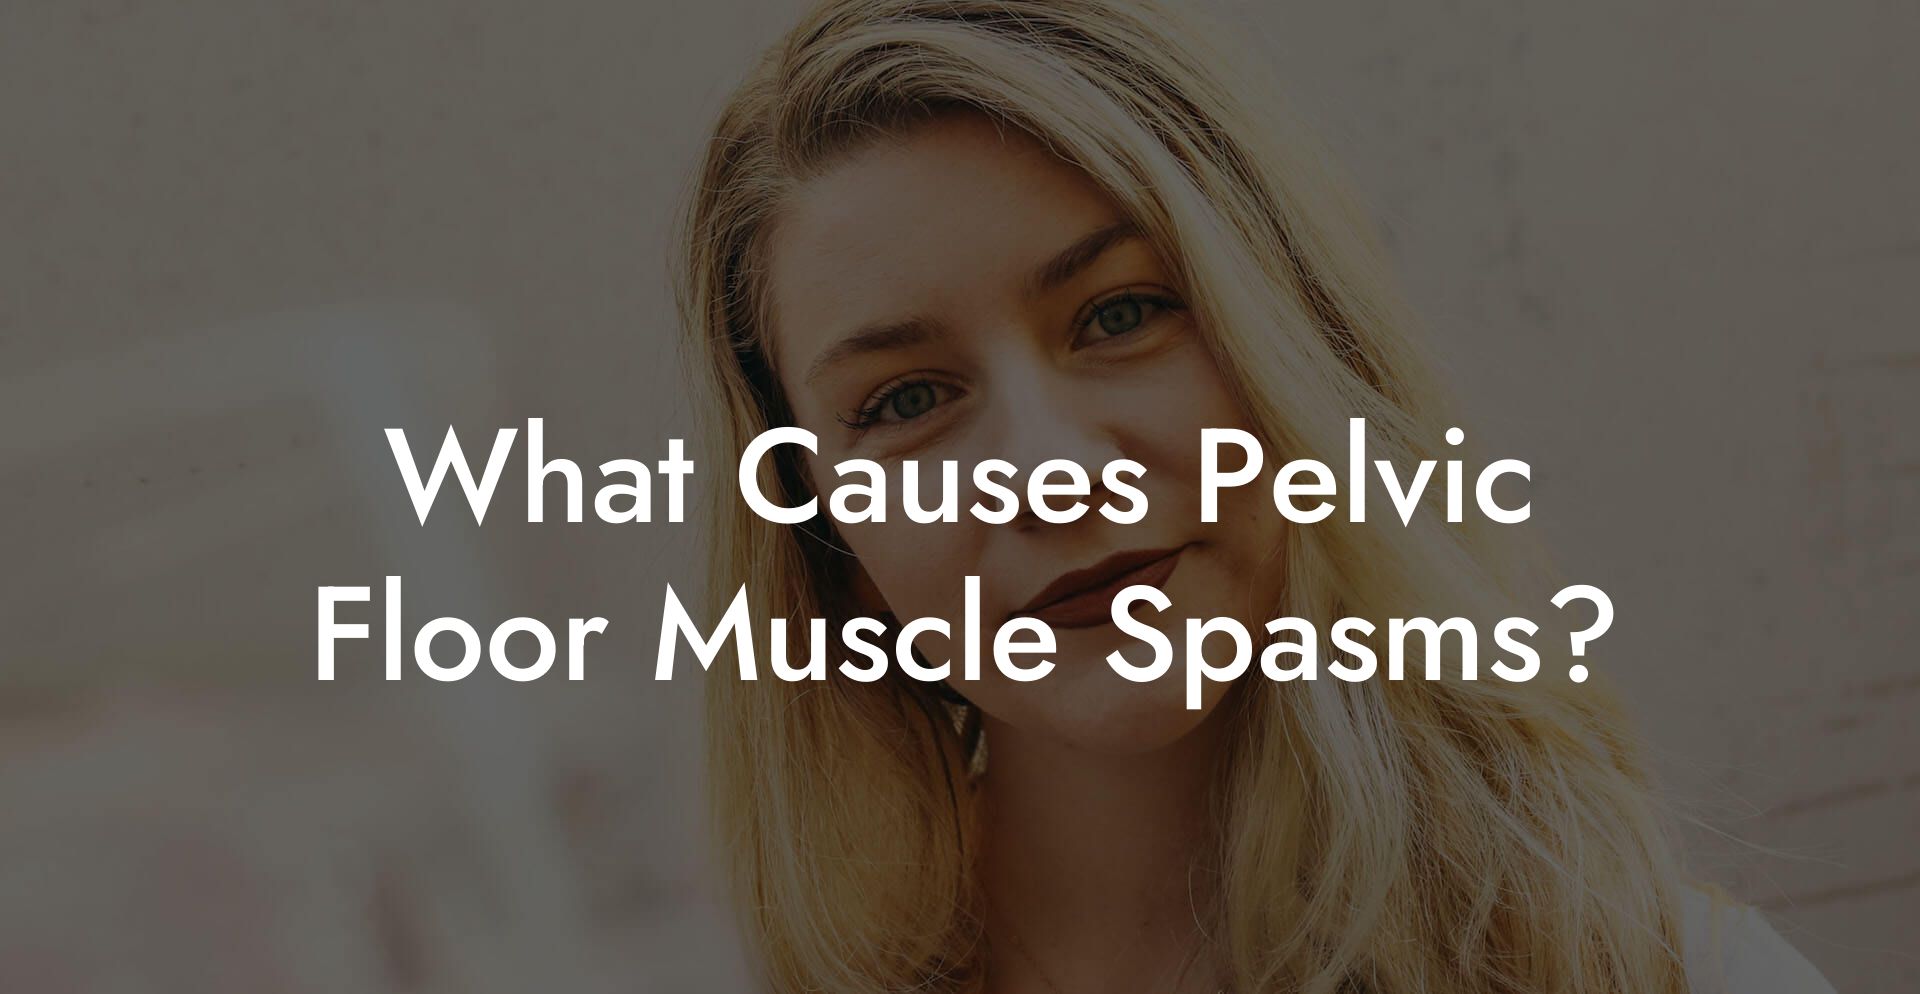 What Causes Pelvic Floor Muscle Spasms?